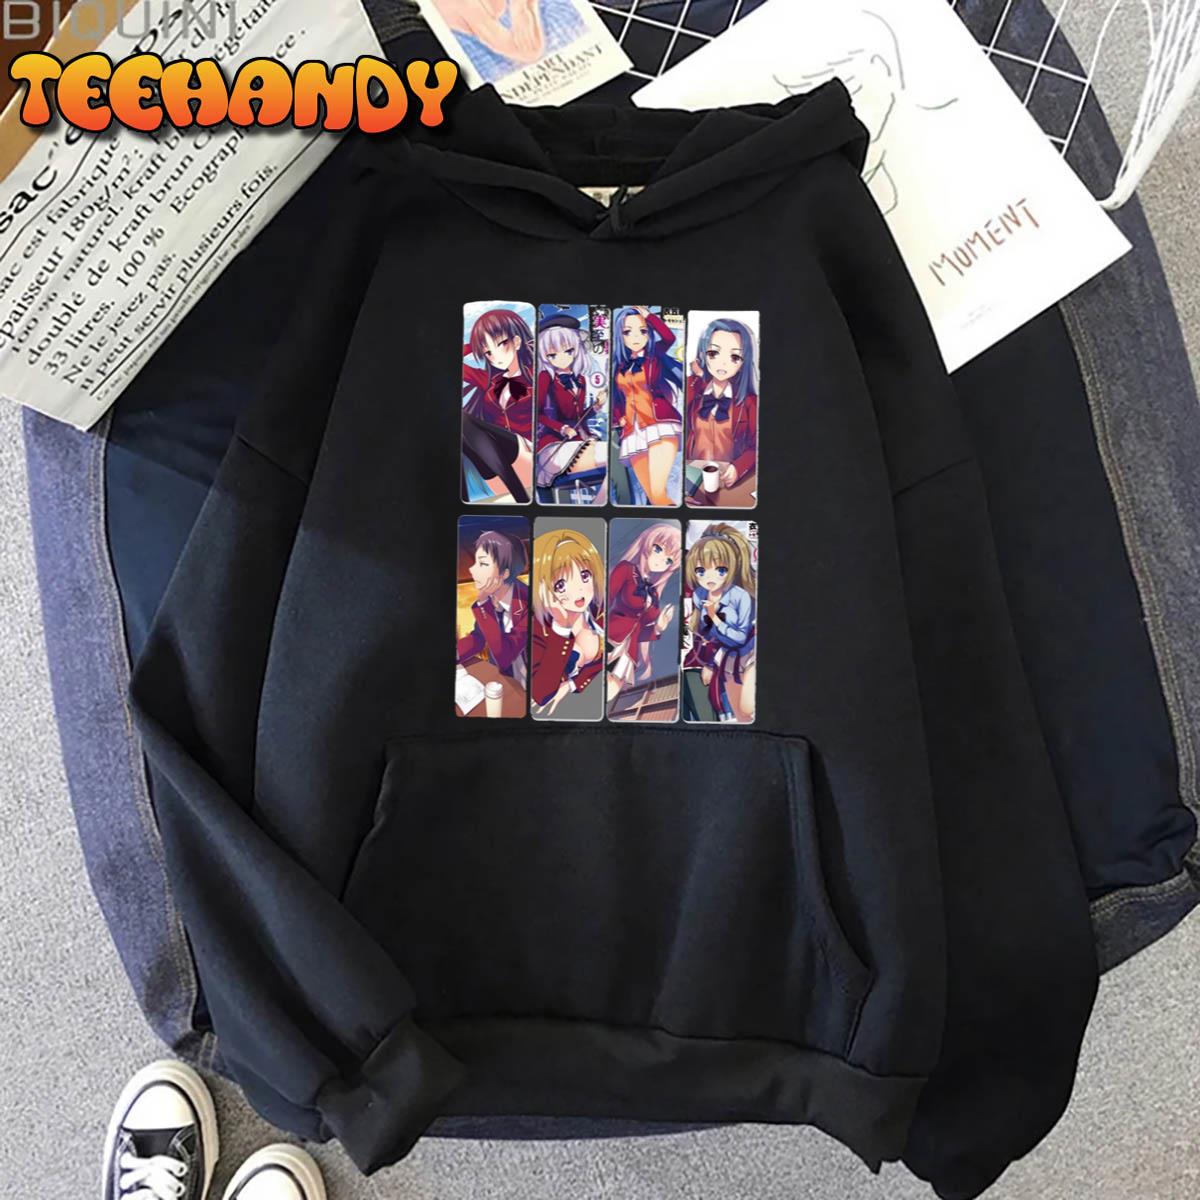 Classroom Of The Elite Anime Manga Unisex T-Shirt